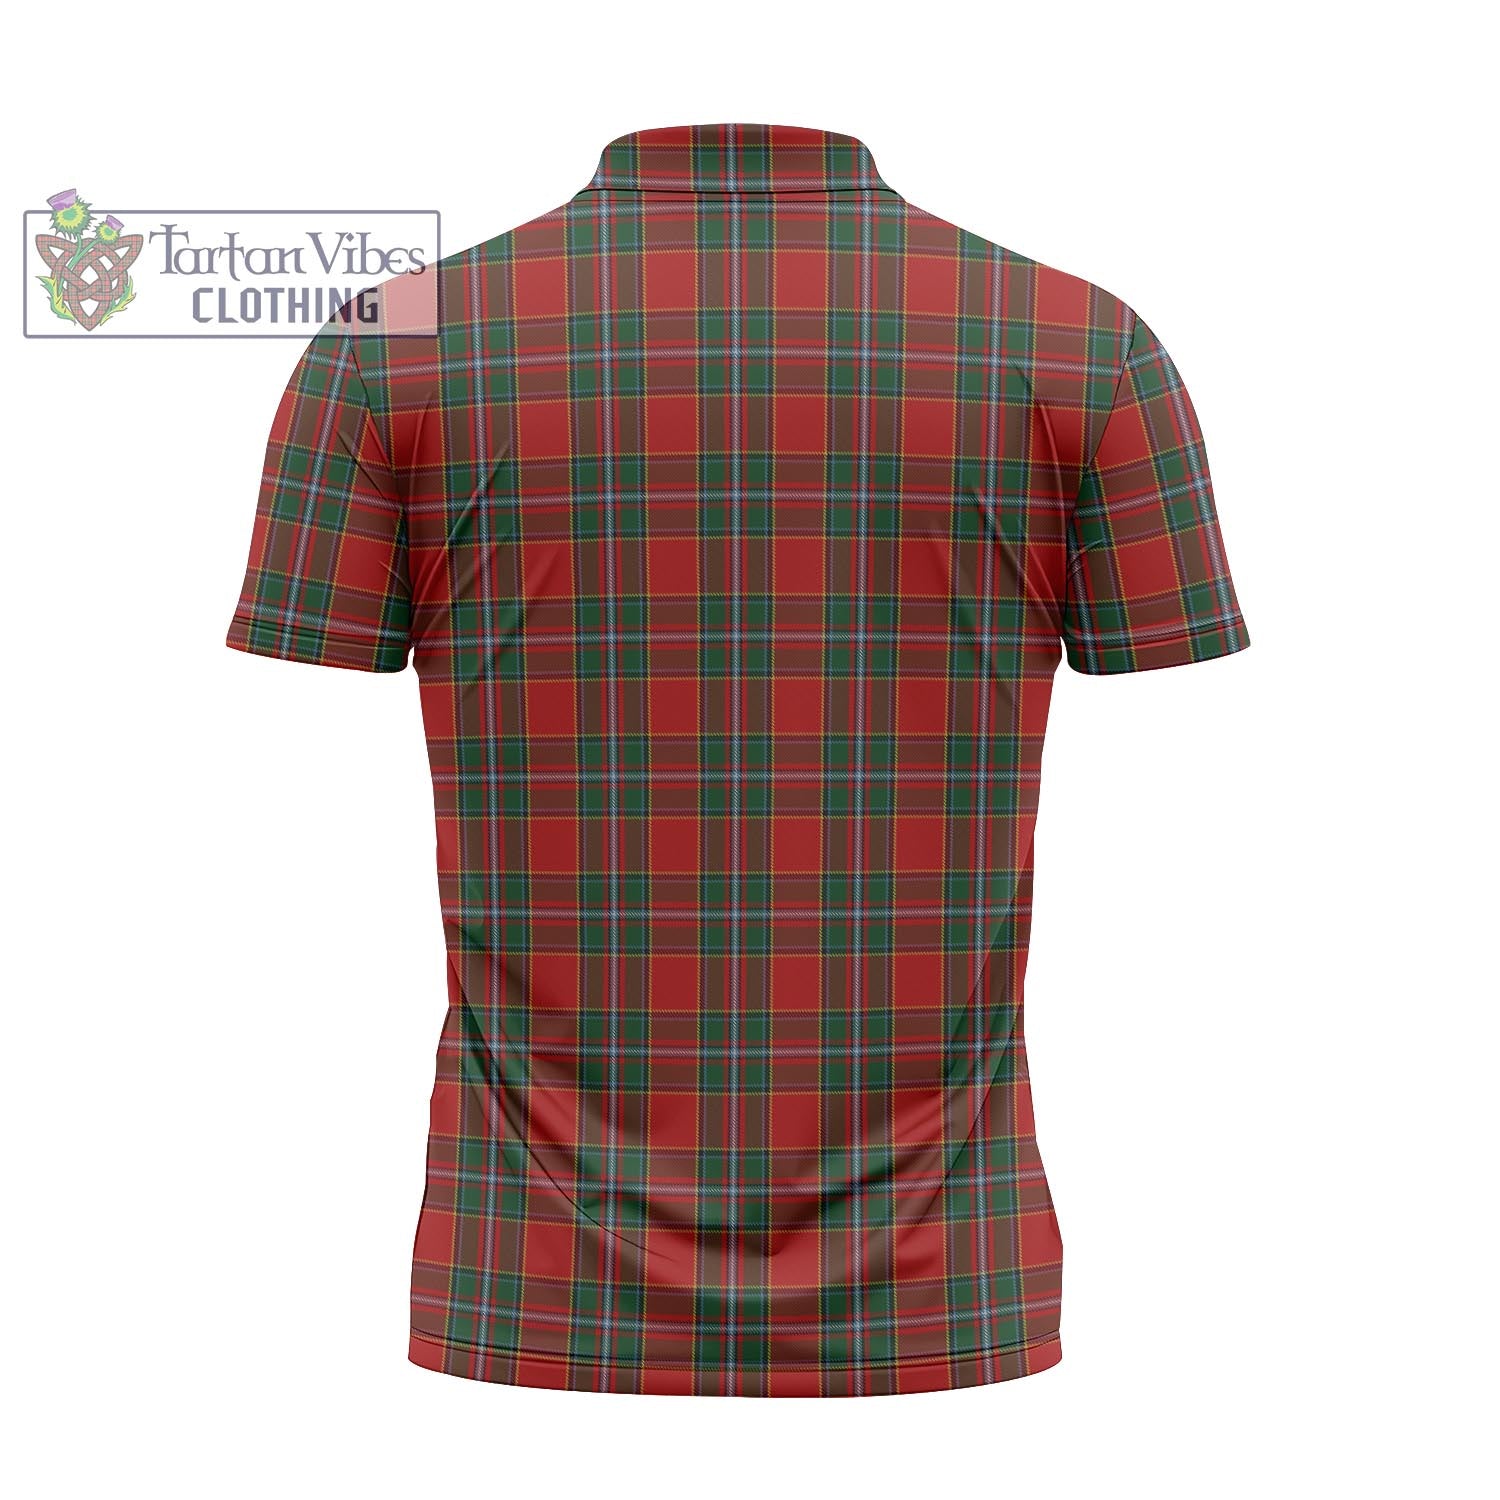 Tartan Vibes Clothing Drummond Ancient Tartan Zipper Polo Shirt with Family Crest